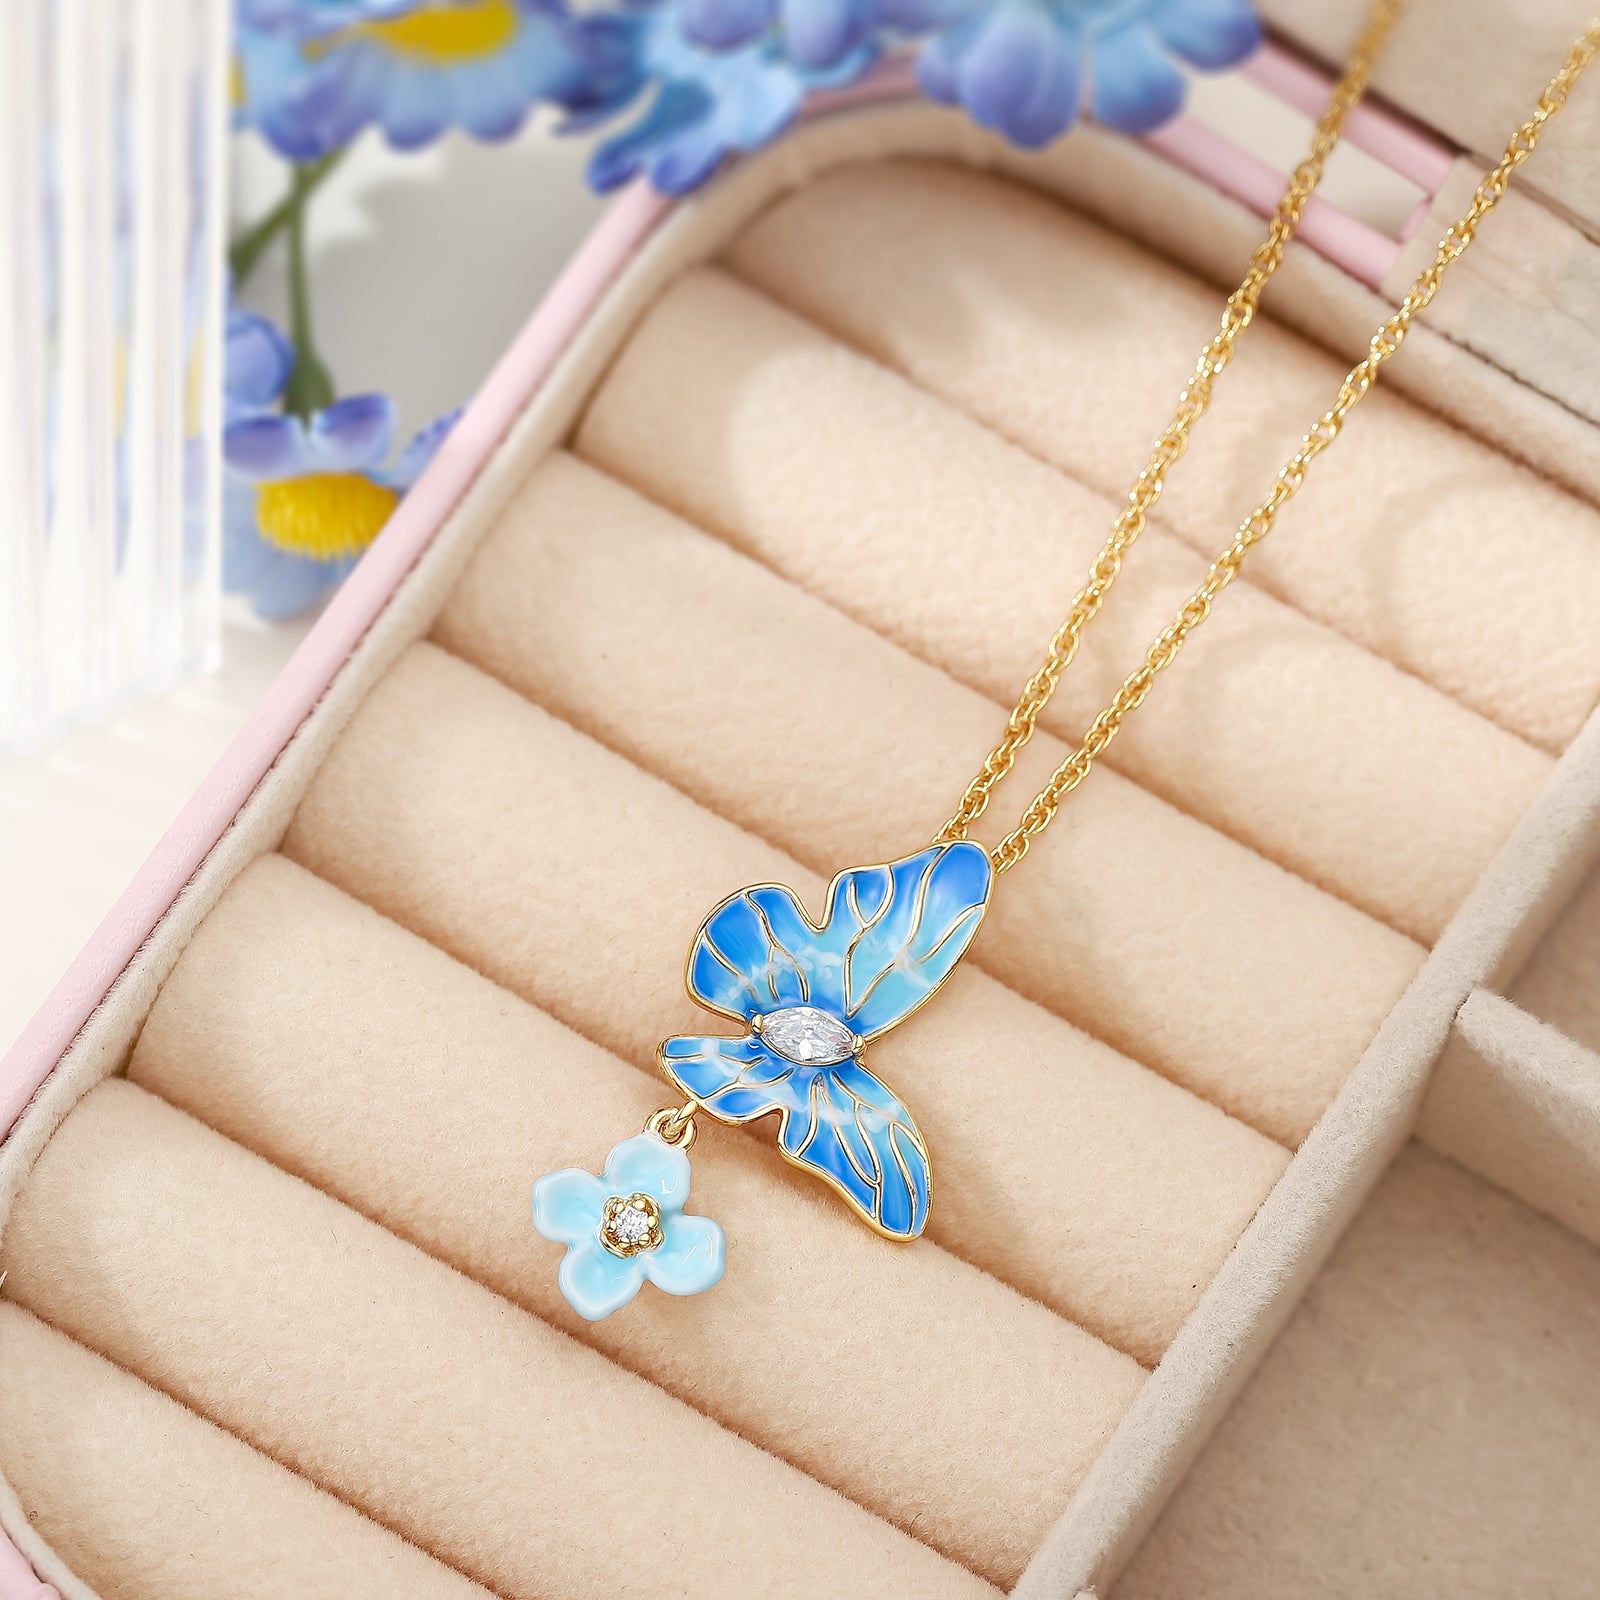 Blue Morpho Butterfly Enamel Necklace Nature Jewelry